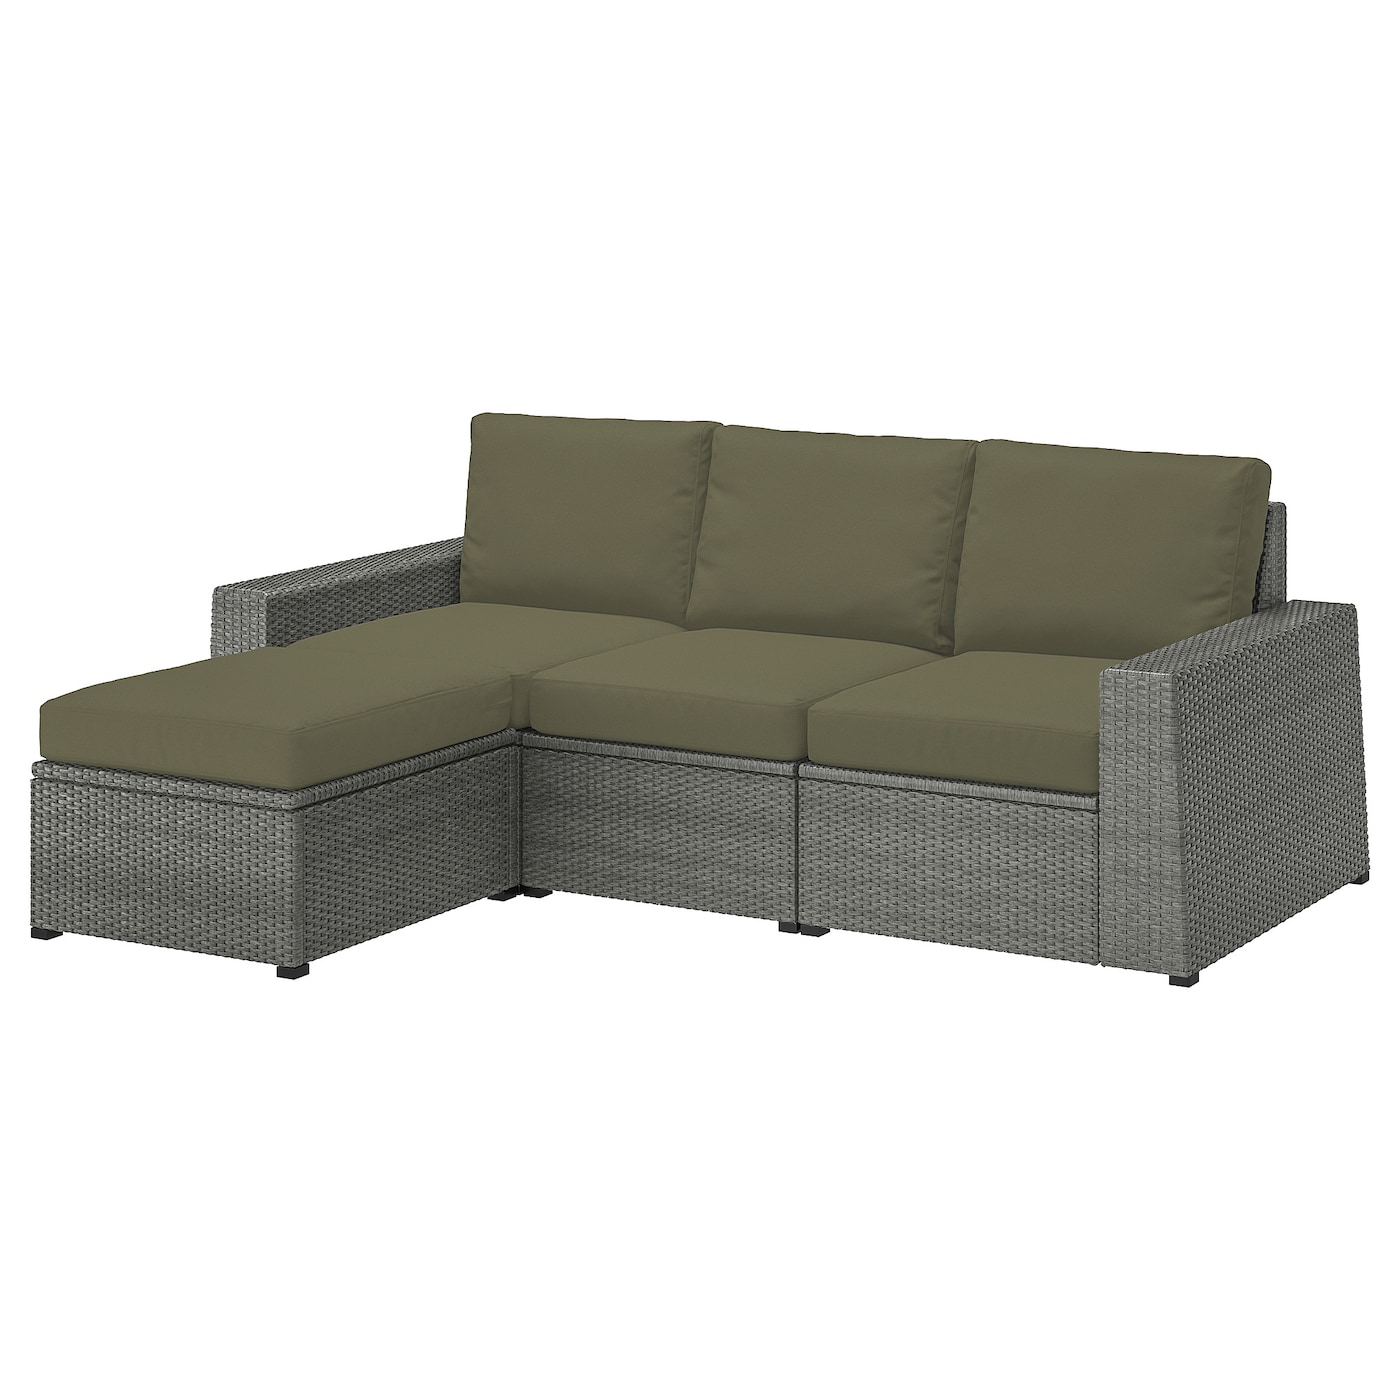 3-местный модульный диван - IKEA SOLLERÖN/SOLLERON/СОЛЛЕРОН ИКЕА, 88х144х223 см, темно-зеленый/серый